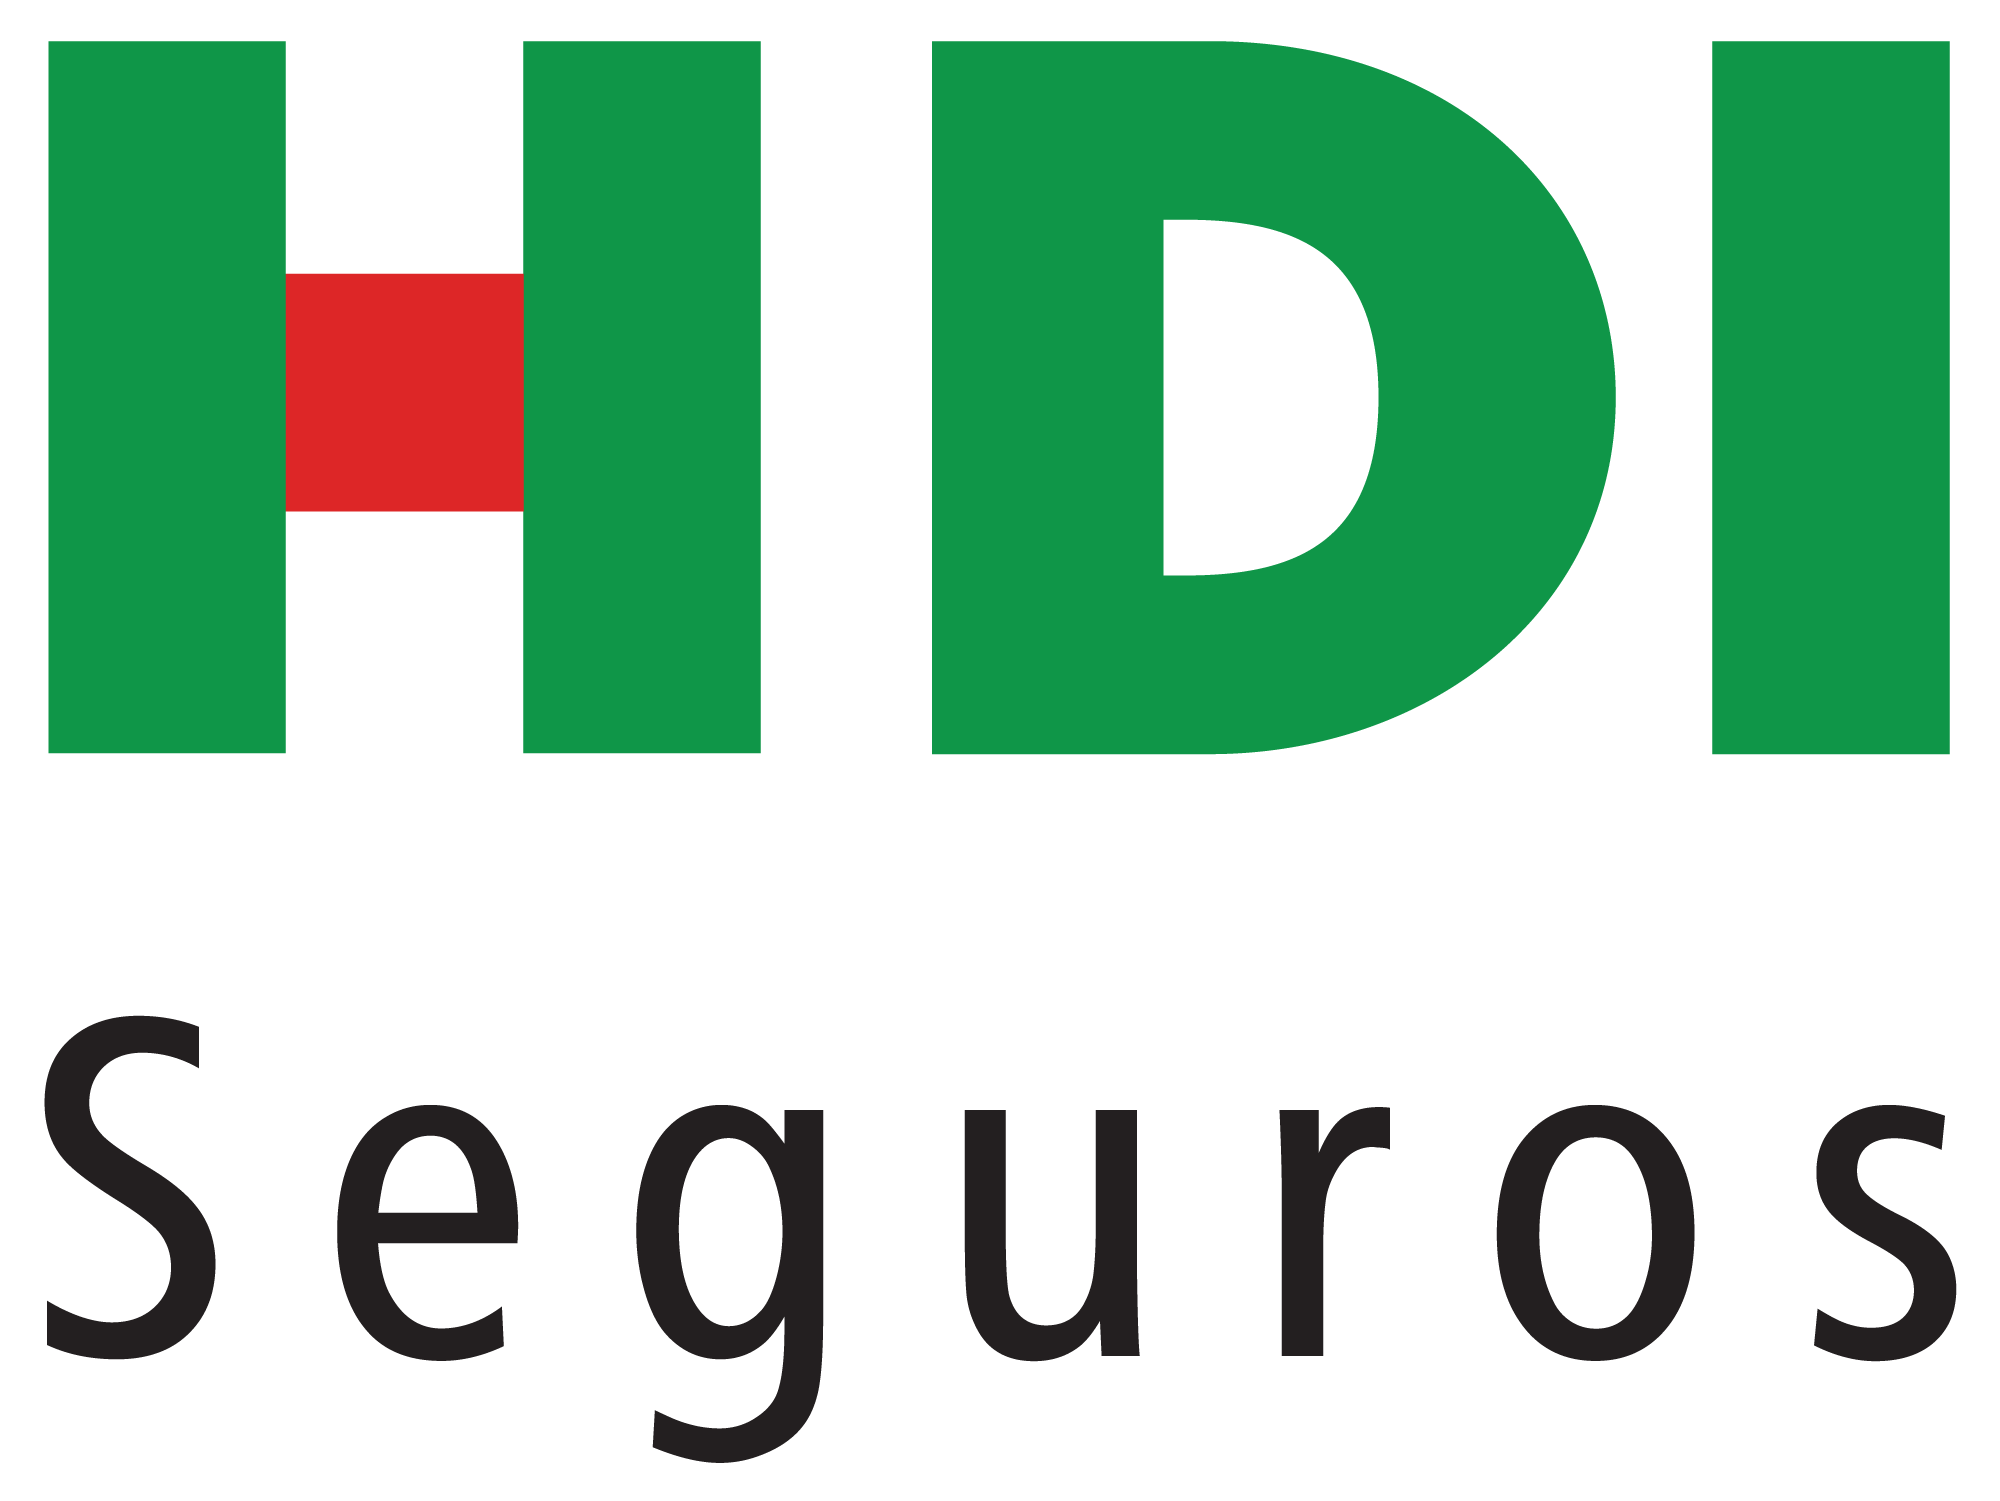 Logo HDI Seguros